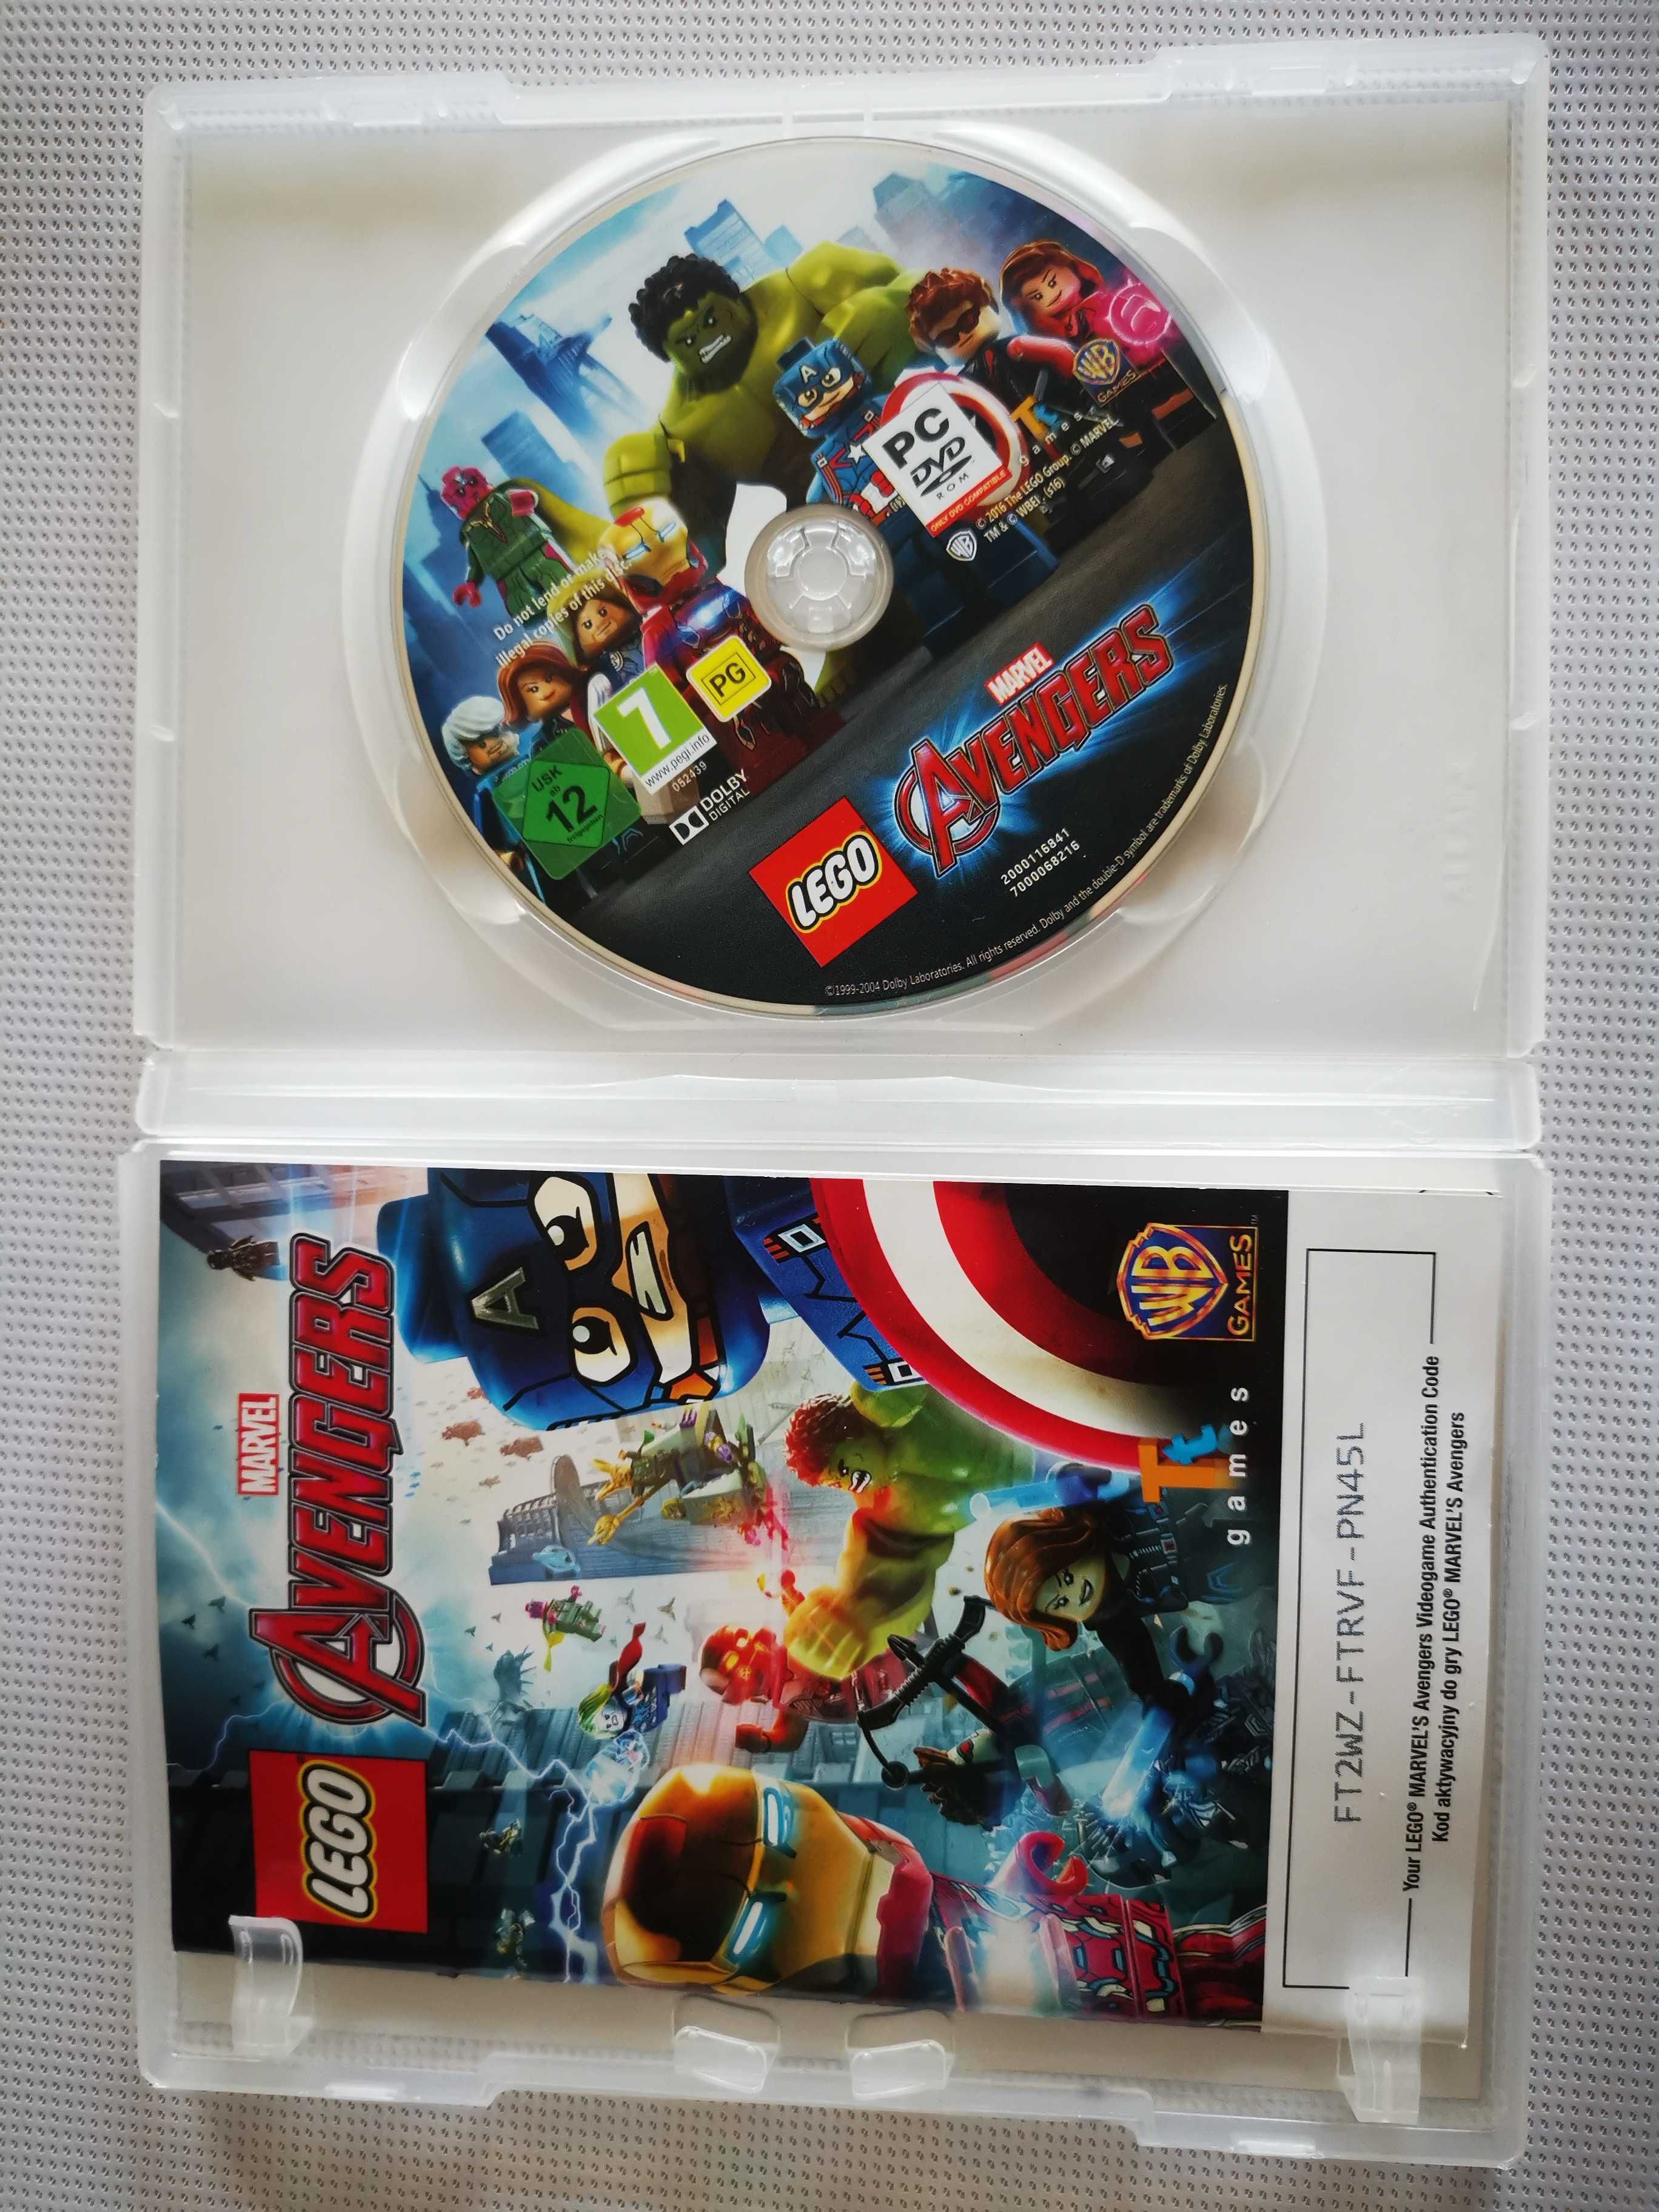 Gra LEGO Avengers MARVEL na PC